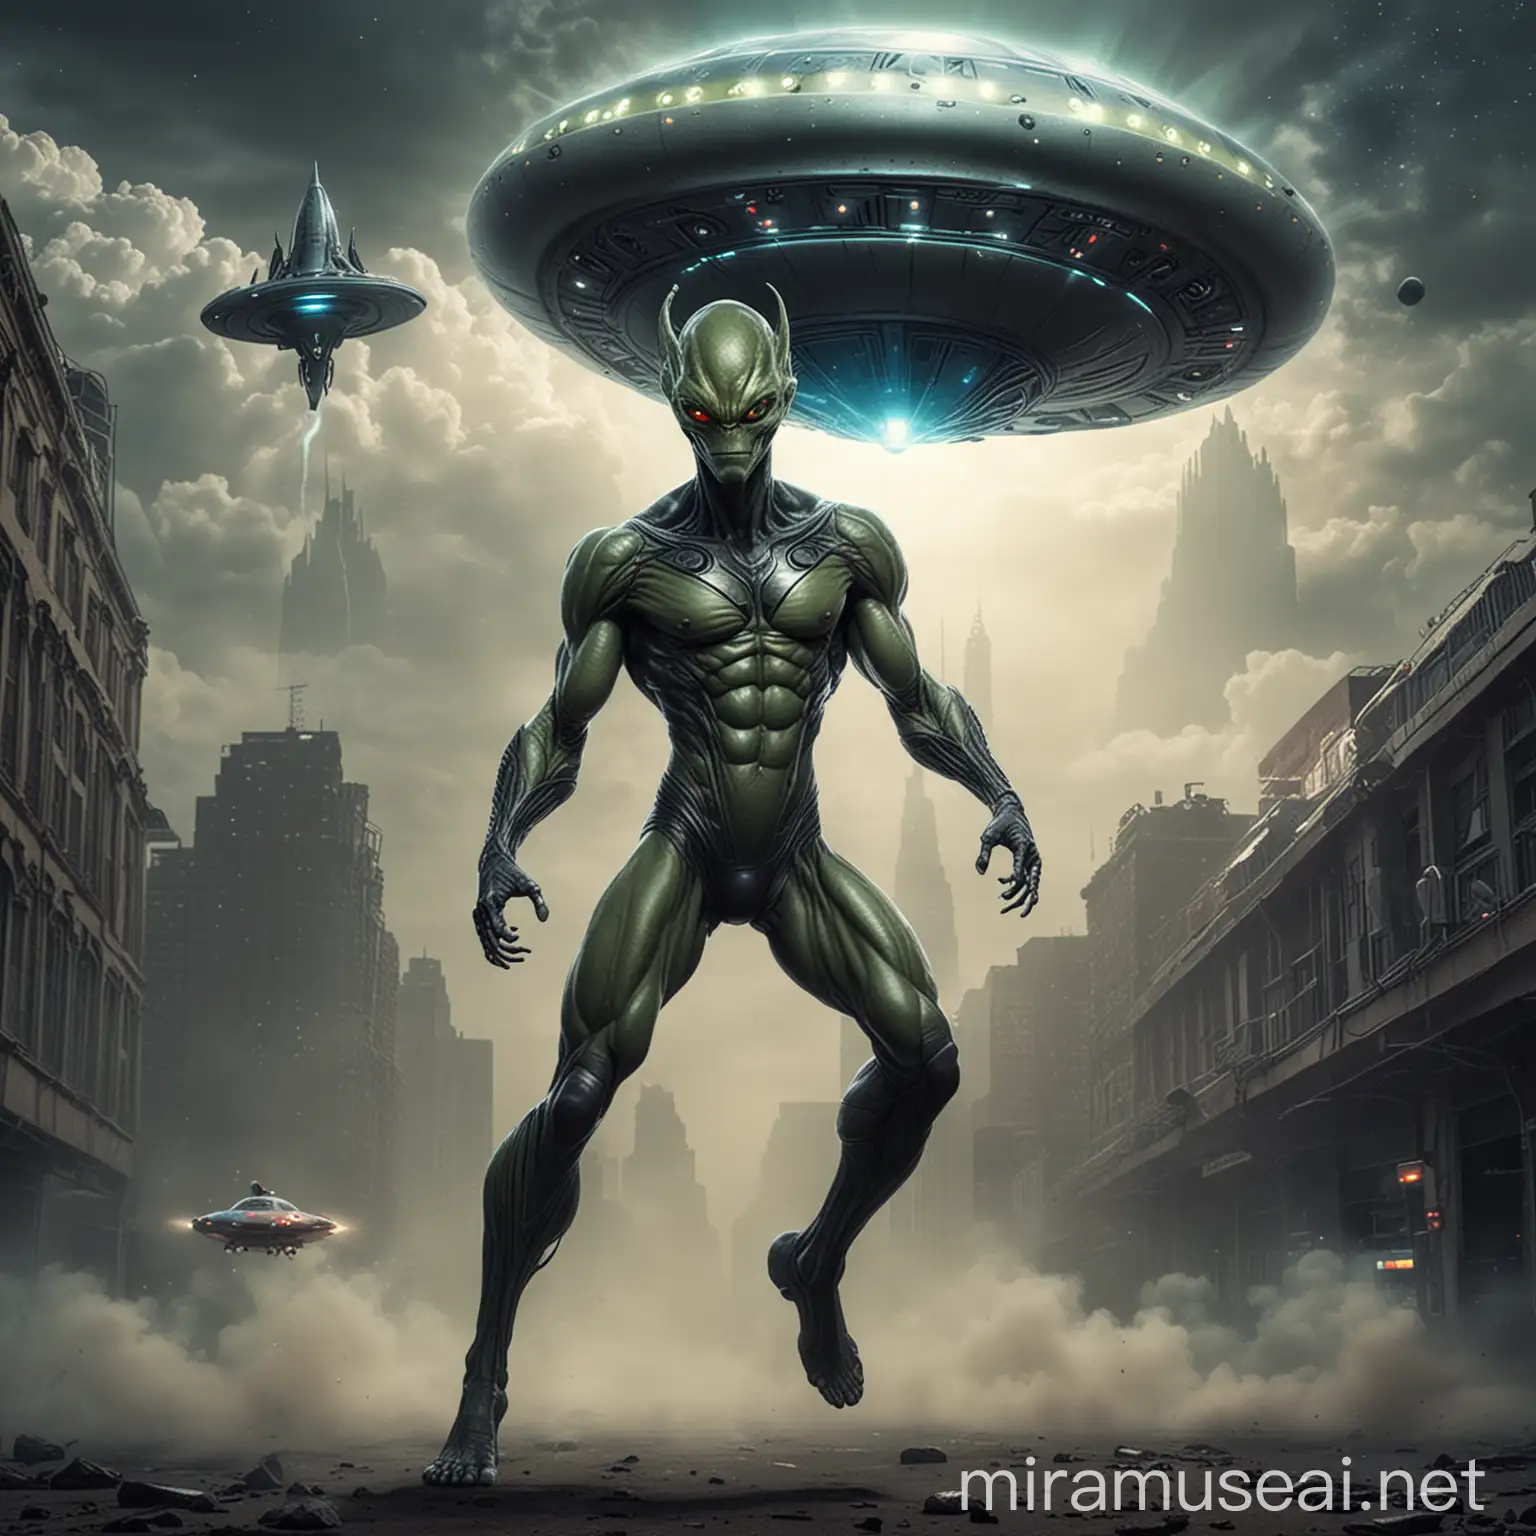 Superhero Alien with UFO